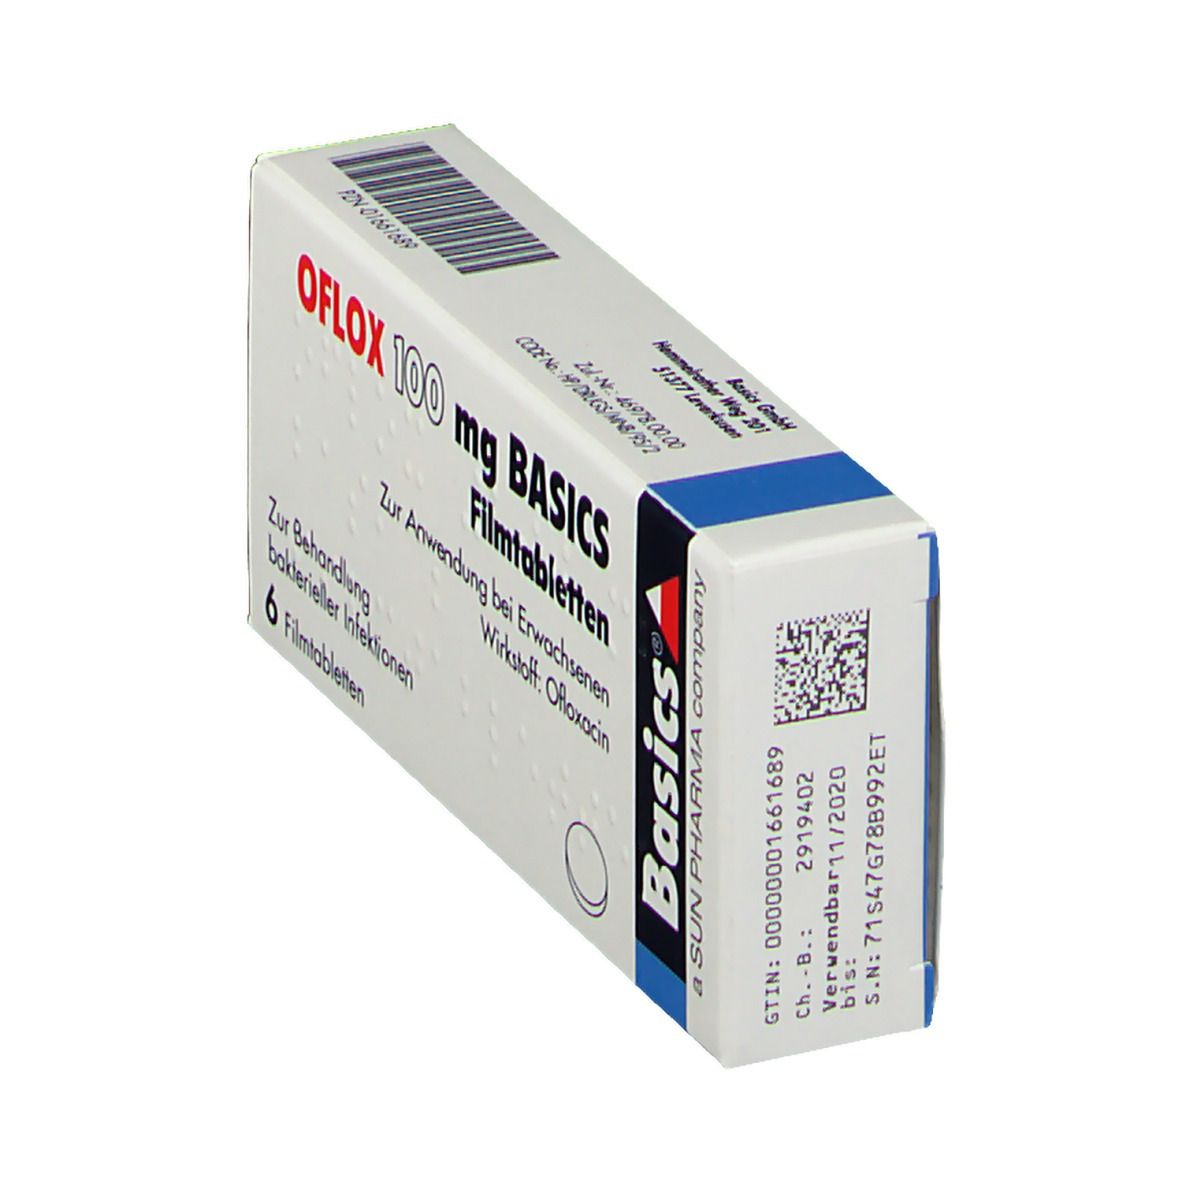 OFLOX 100 mg BASICS